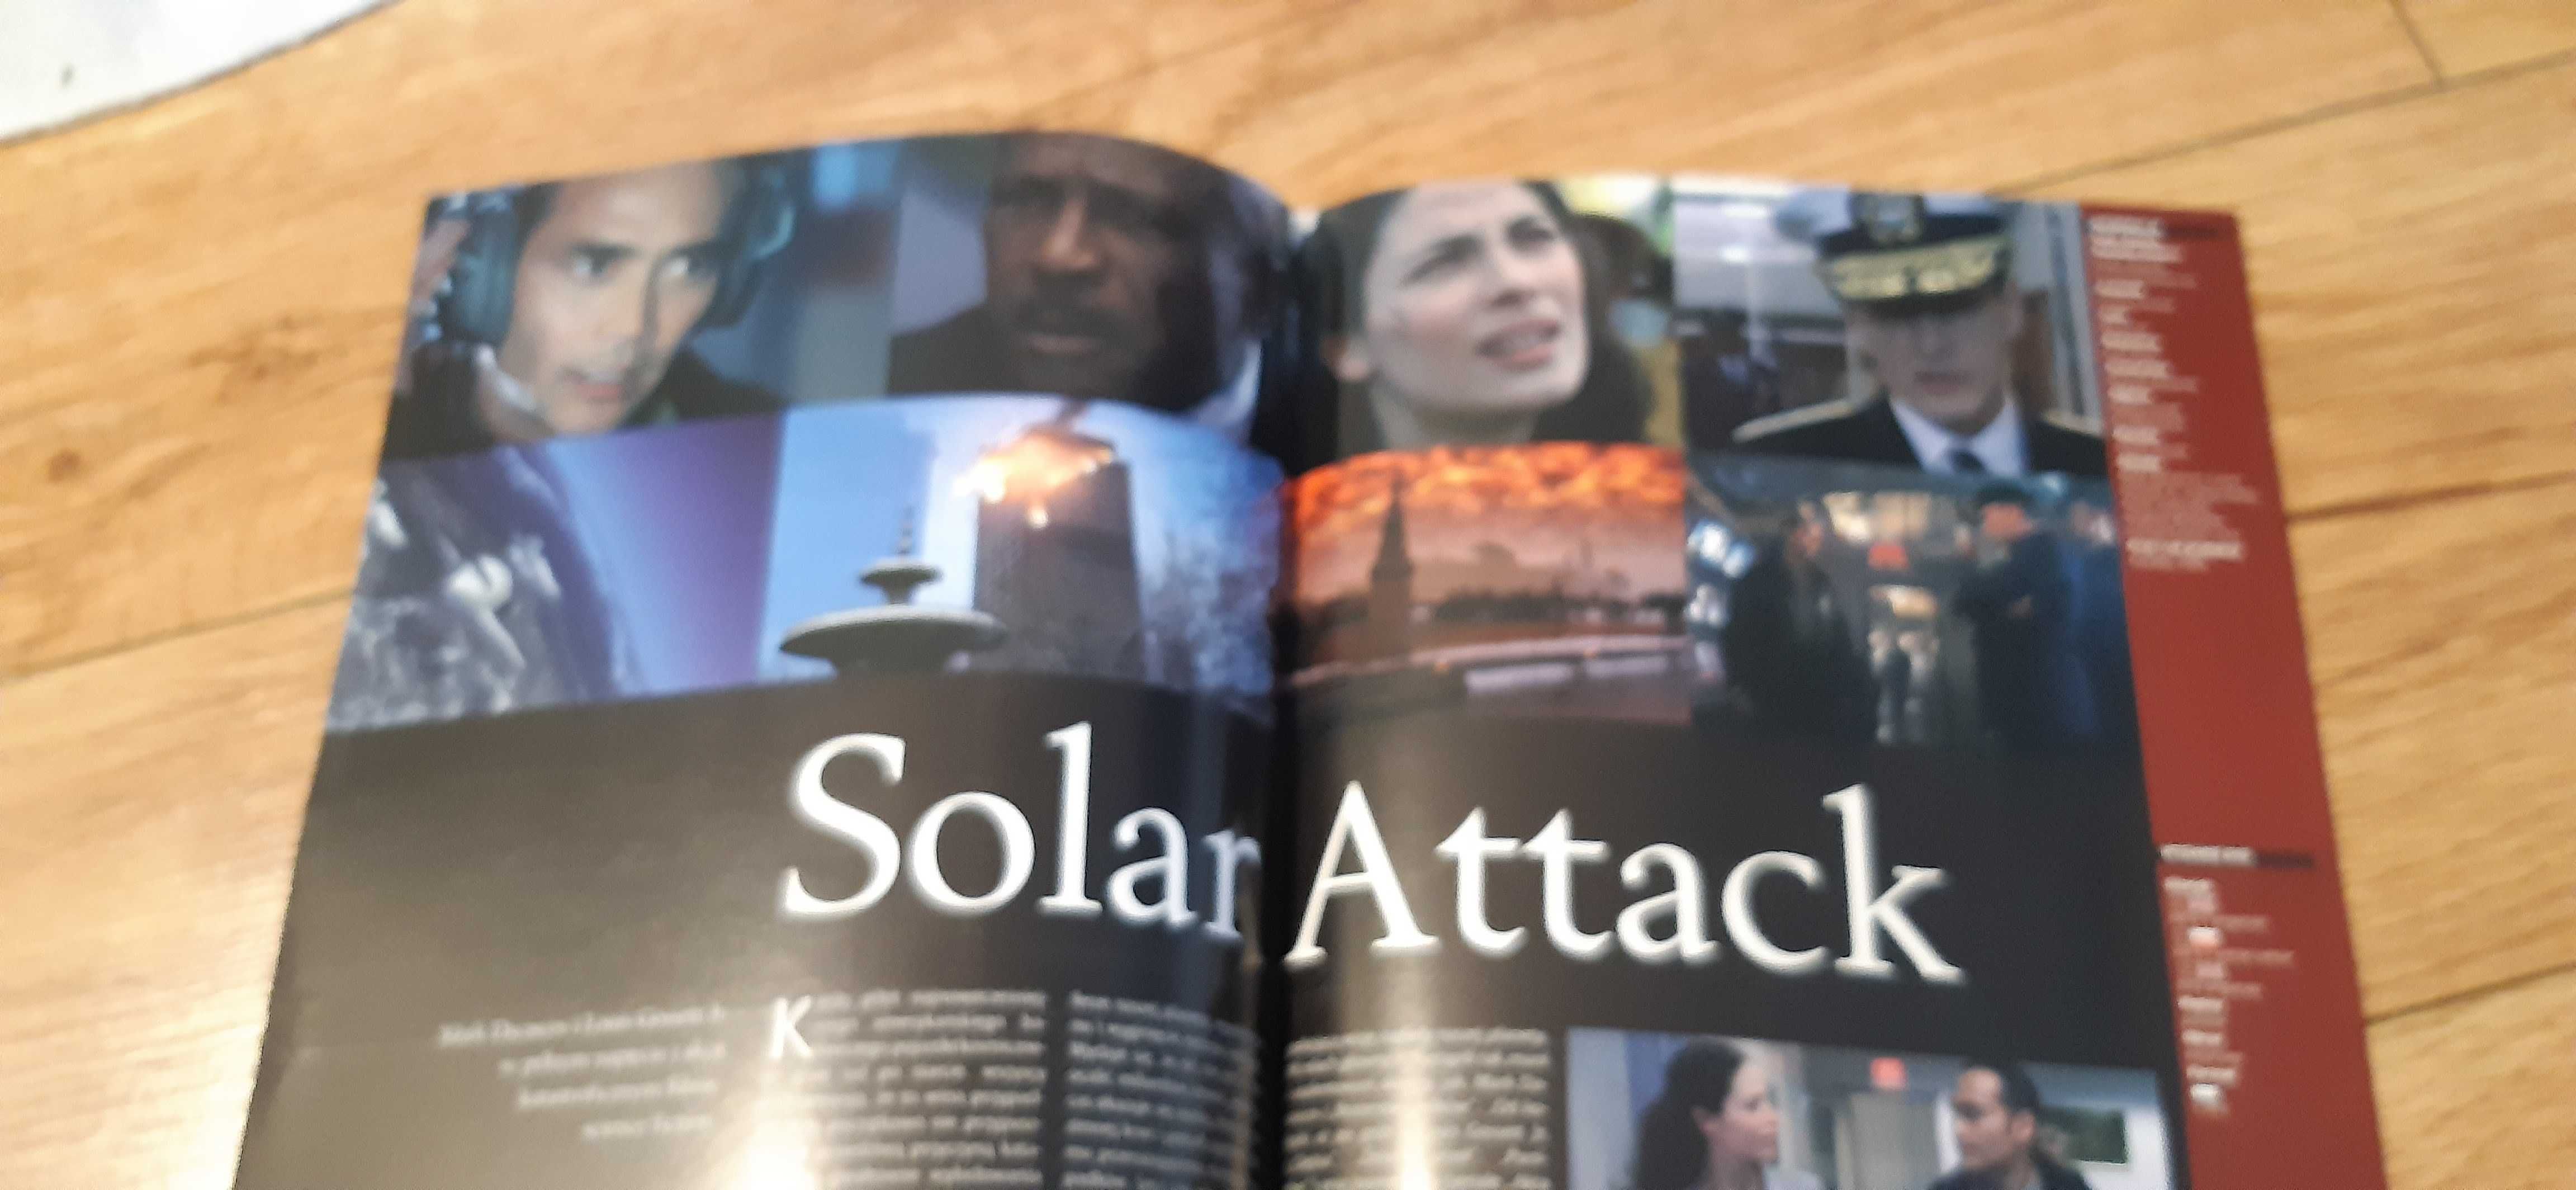 plakat z filmu sc-fi solar attack, mark dacascos